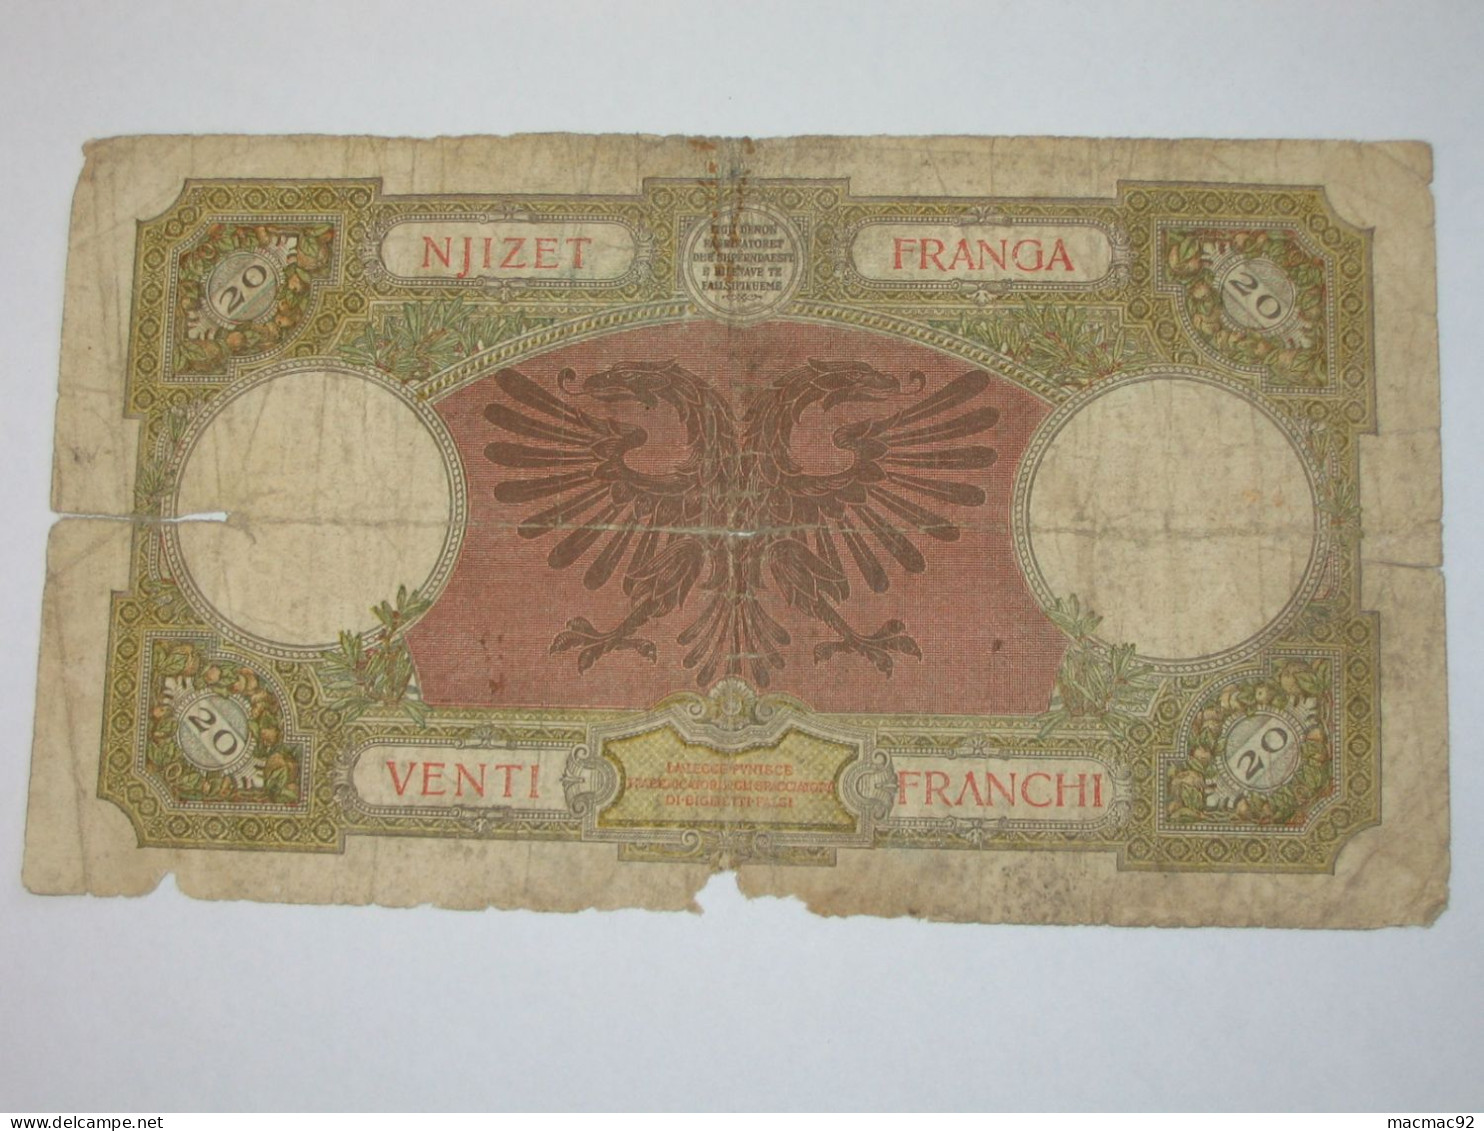 ALBANIE - 100 Njizet Franga 1939 (date Non Marqué) - Banca Nazionale D'Albania   **** EN ACHAT IMMEDIAT **** - Albanië